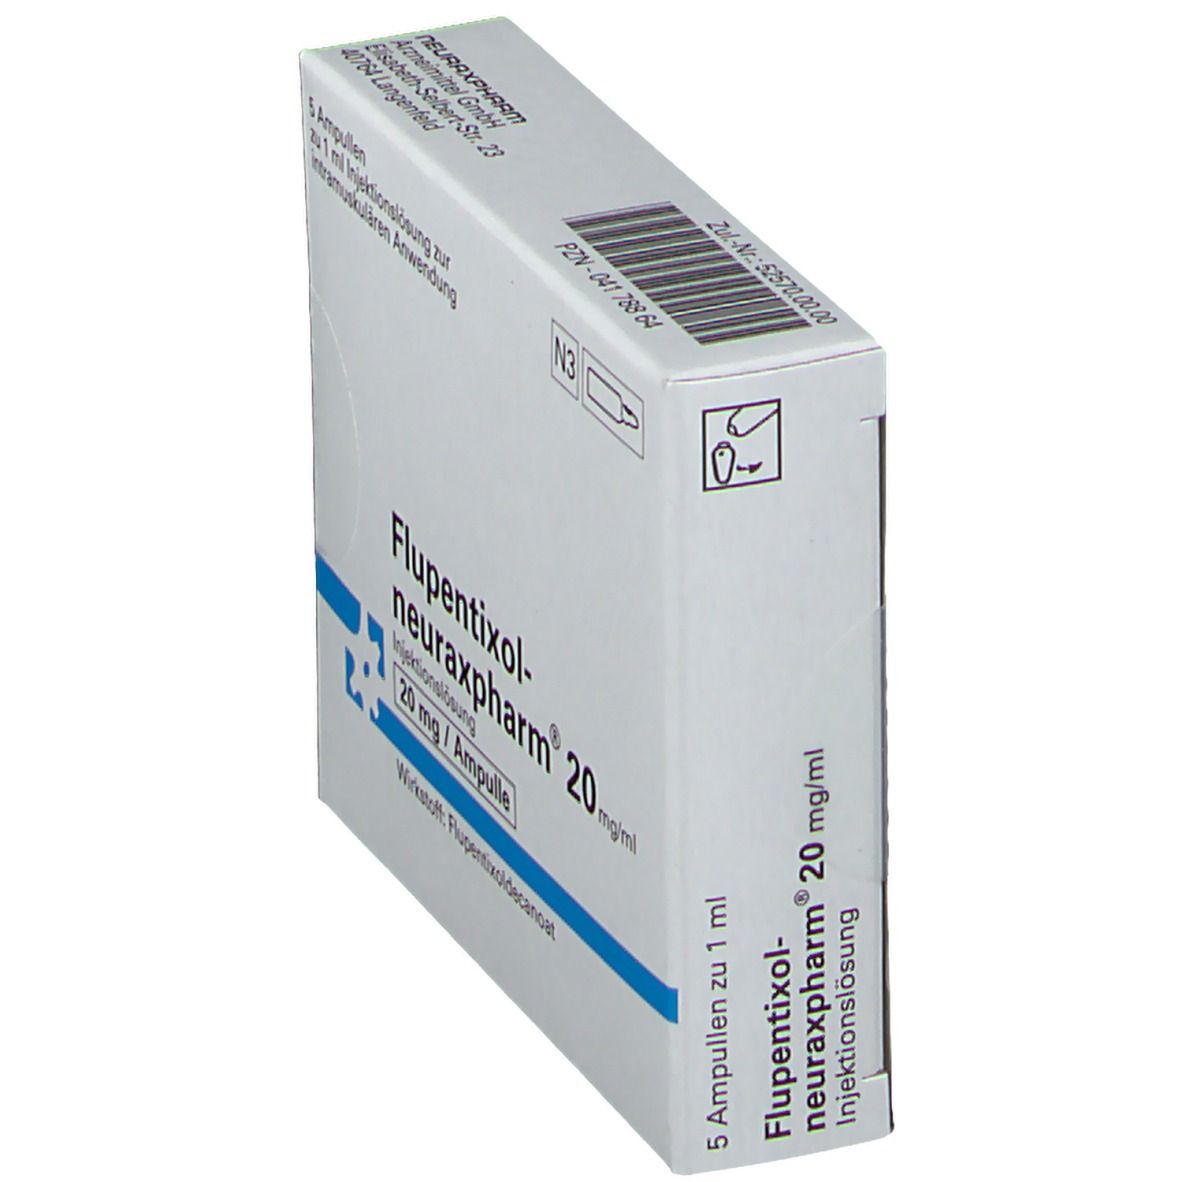 Flupentixol-neuraxpharm® 20 mg/ml